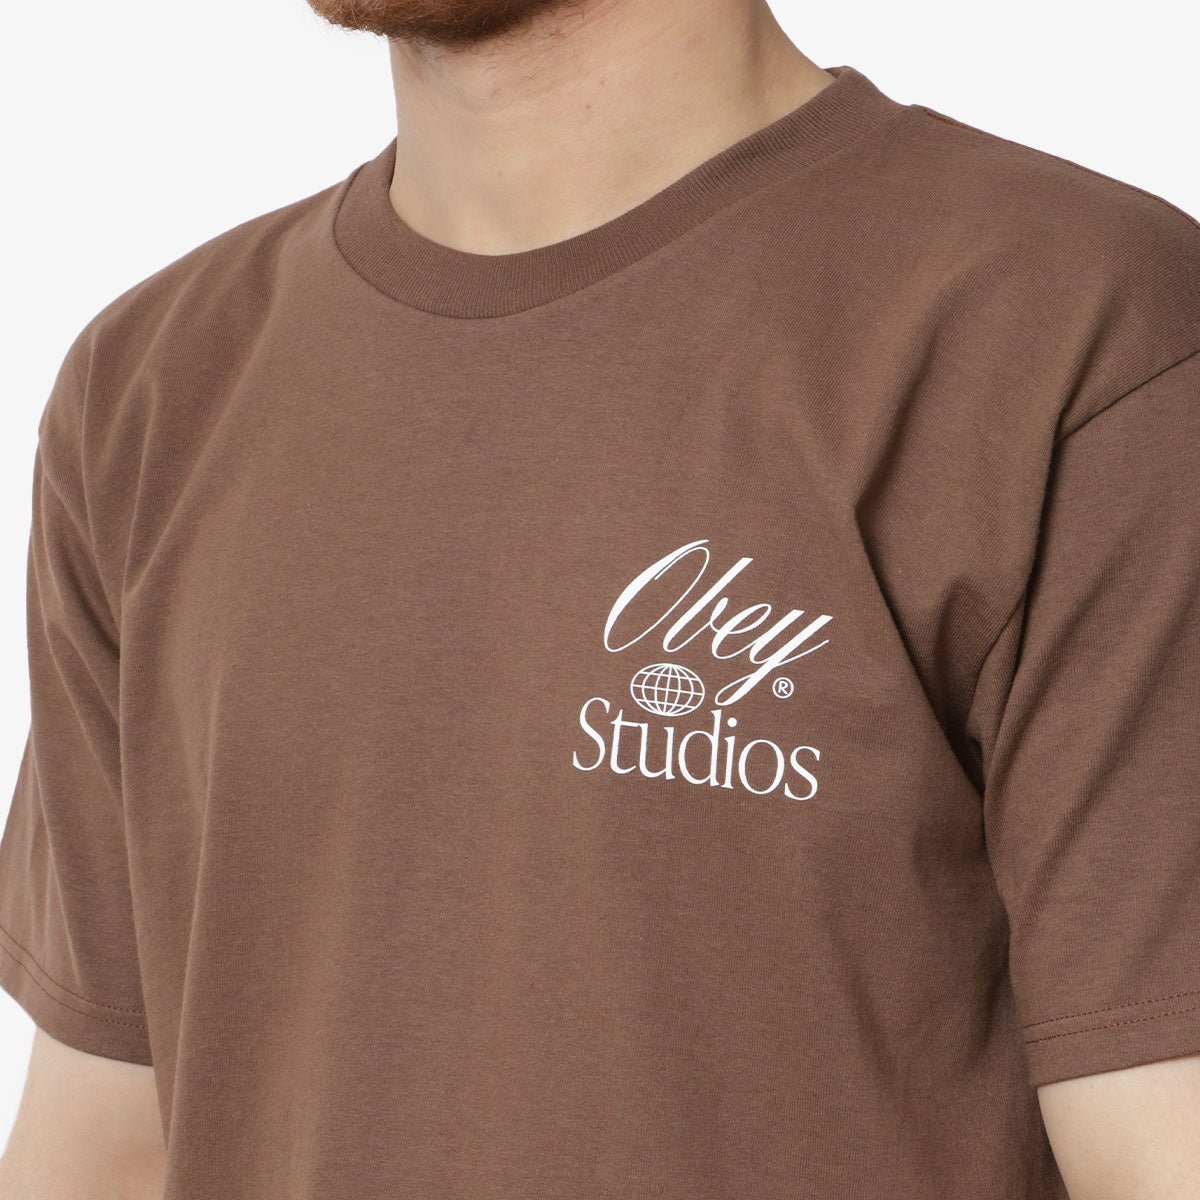 OBEY Studios Worldwide T-Shirt